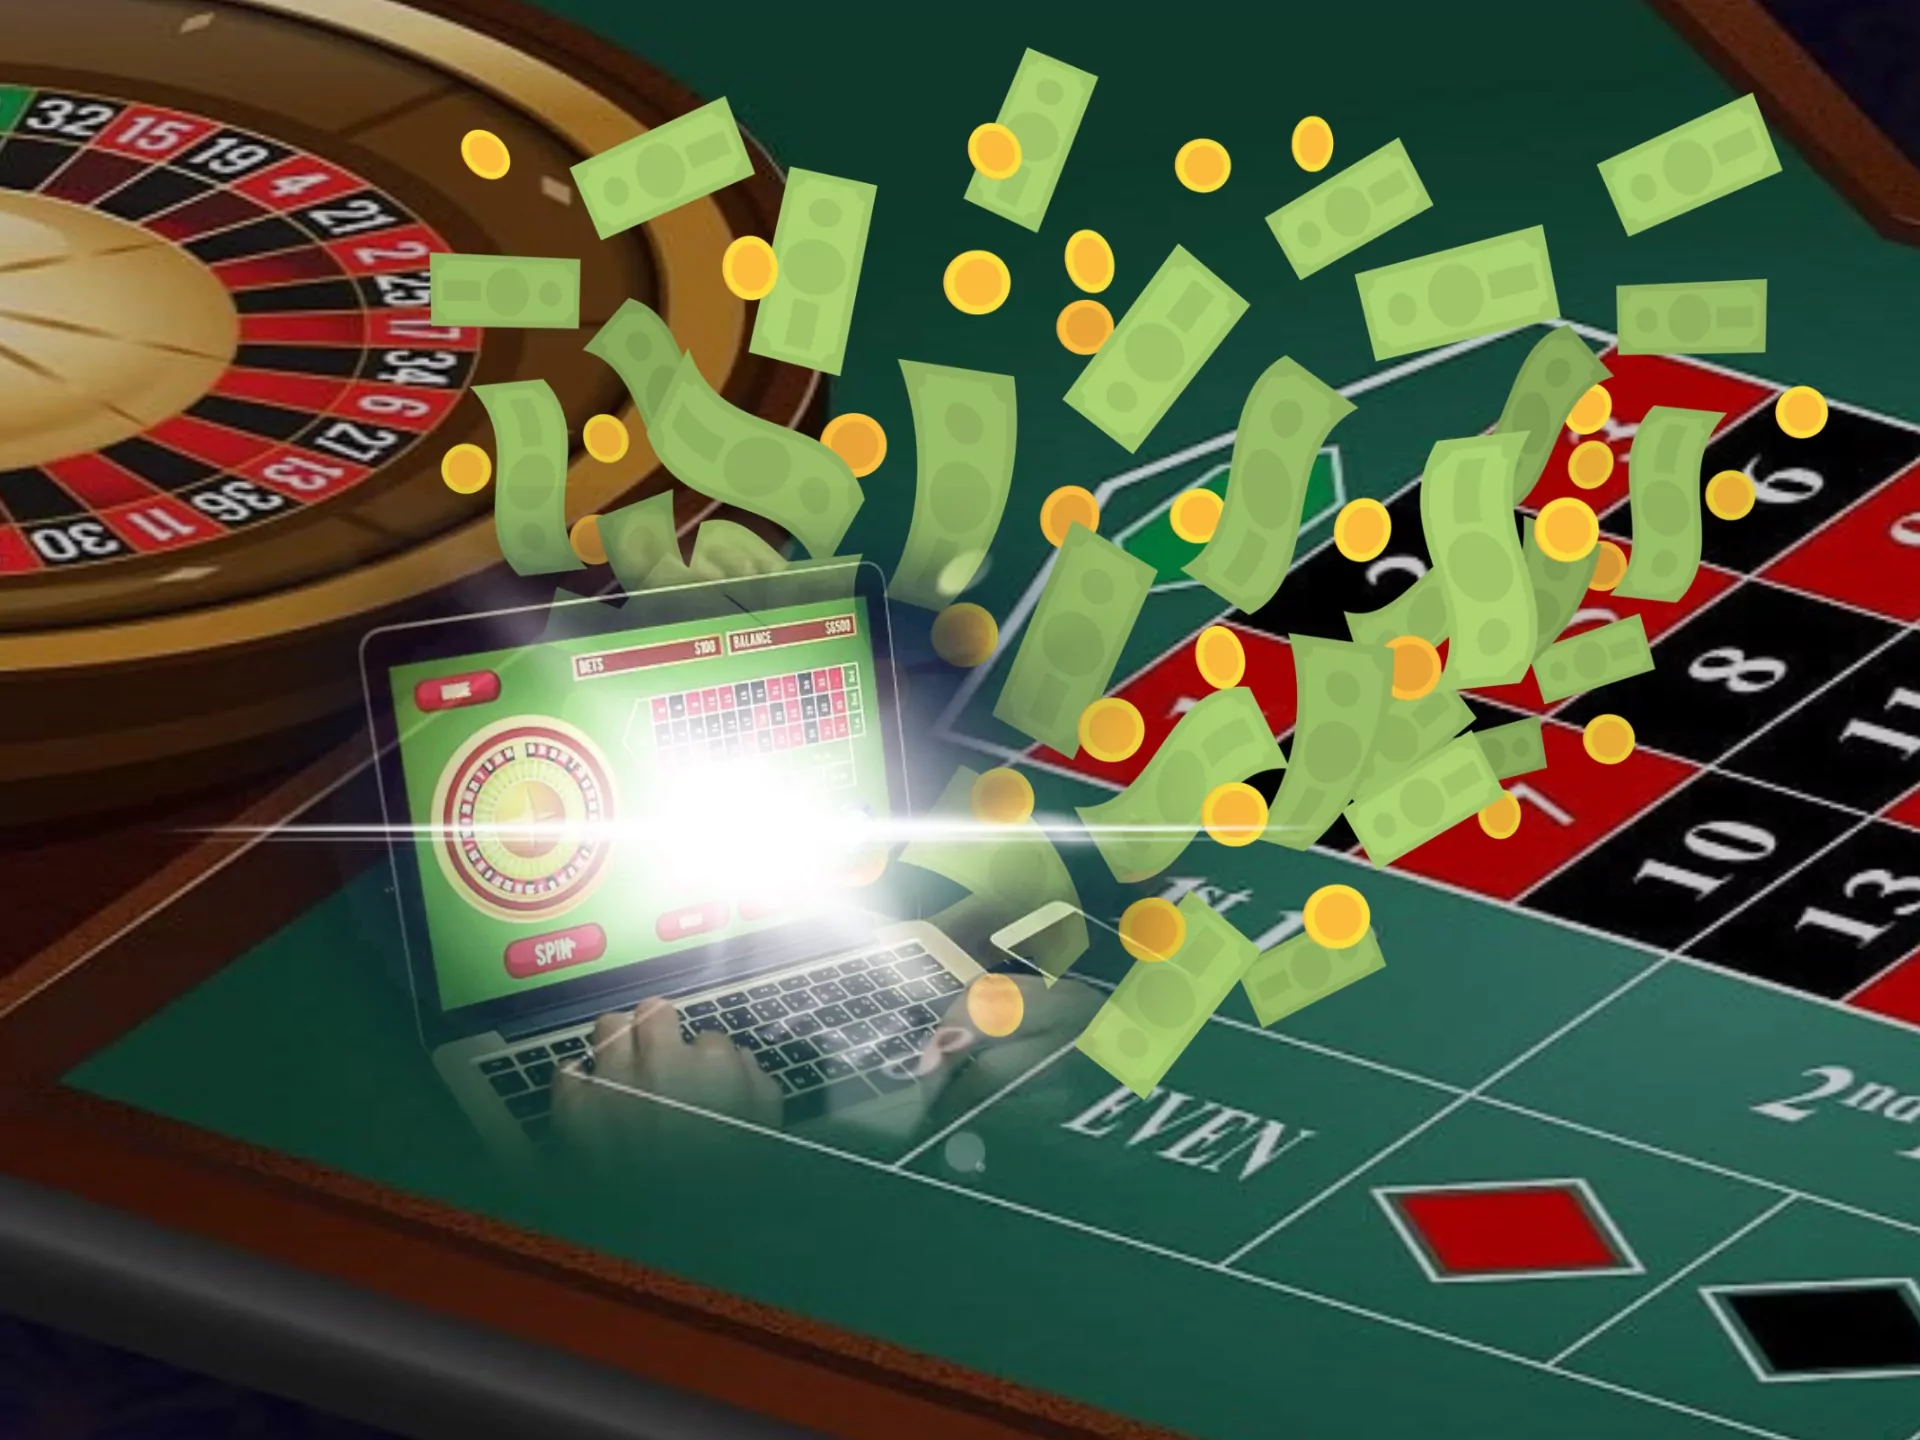 Play online roulette on money at such casinos as Casumo, Parimatch, Melbet, etc.